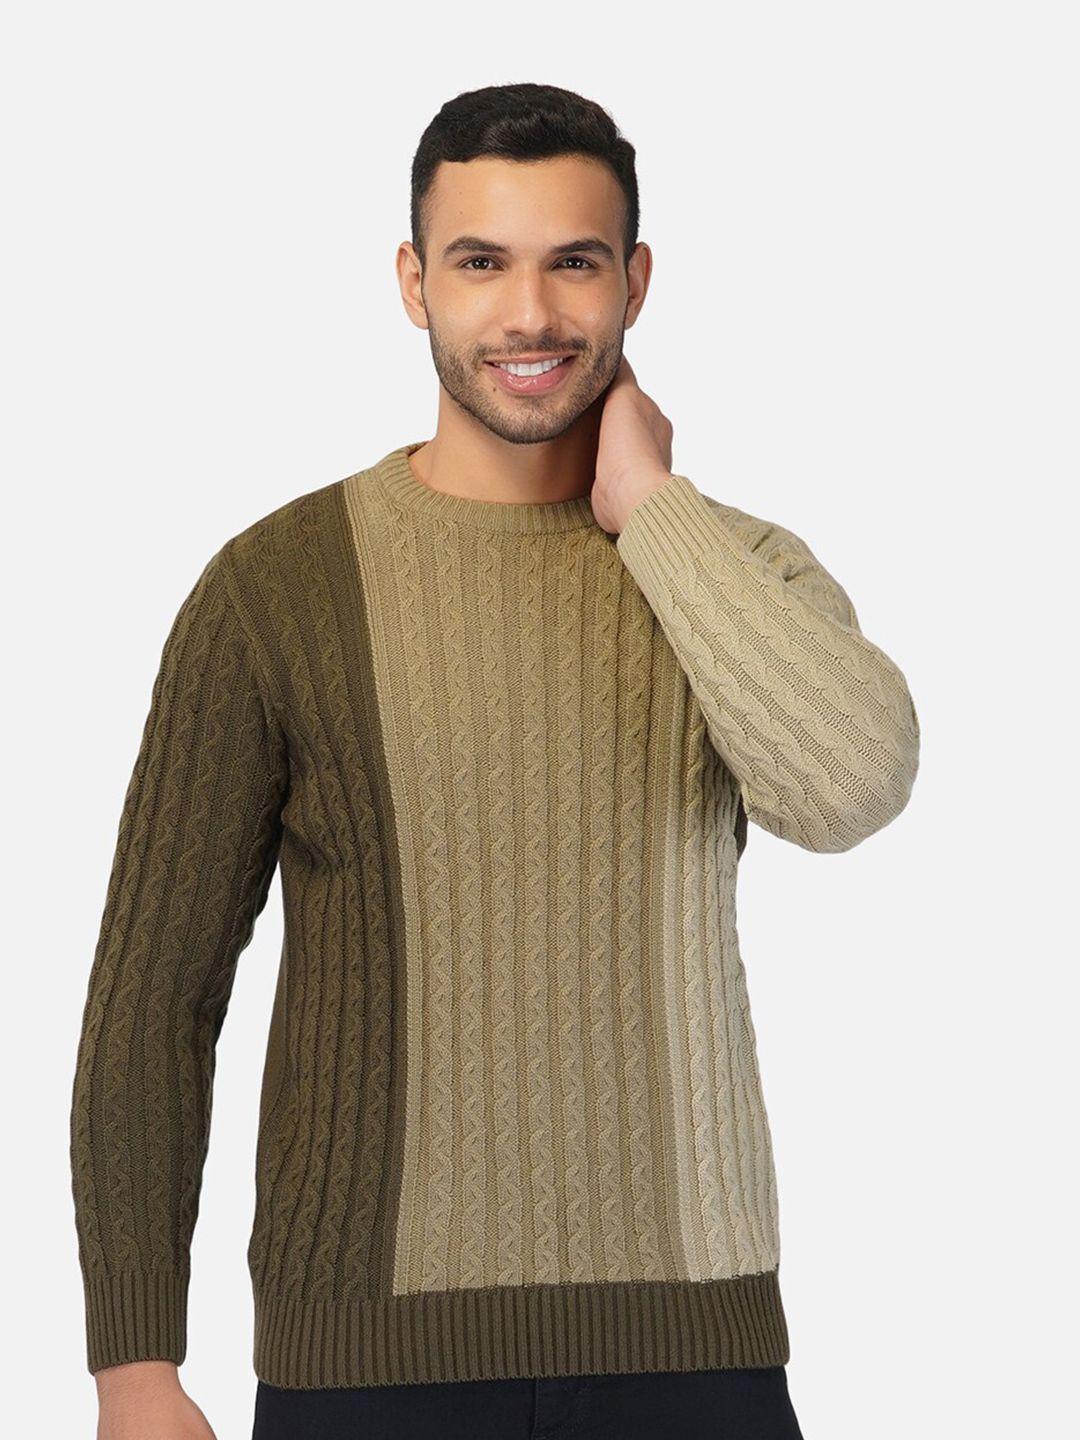 joe hazel men tan & brown cable knit pullover